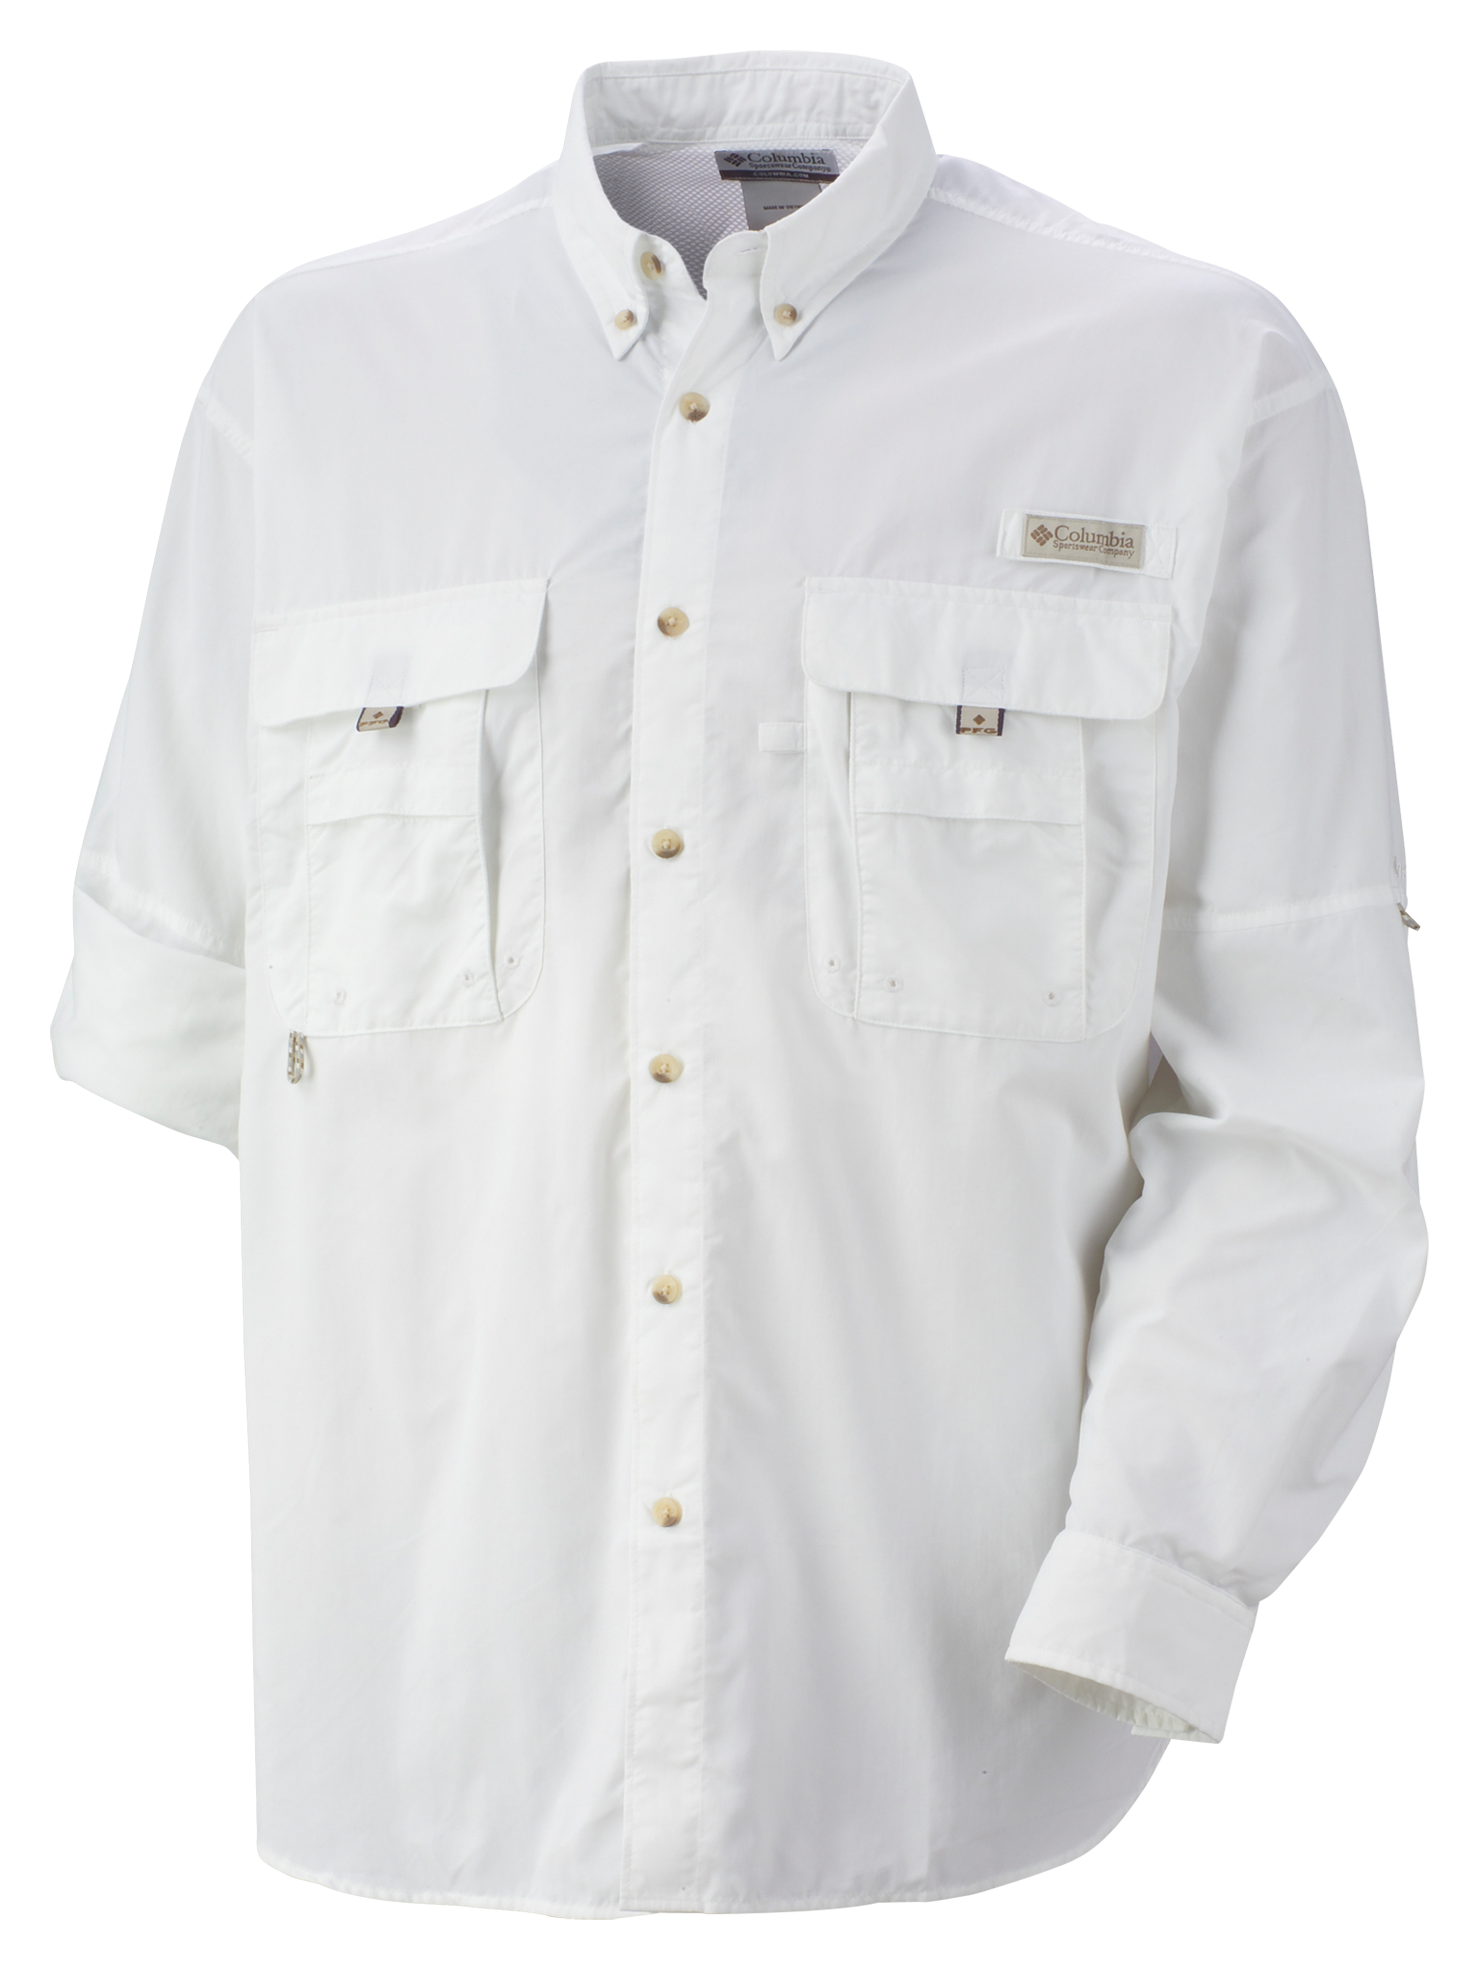 Columbia Bahama II Long-Sleeve Shirt with Omni-Shade for Men